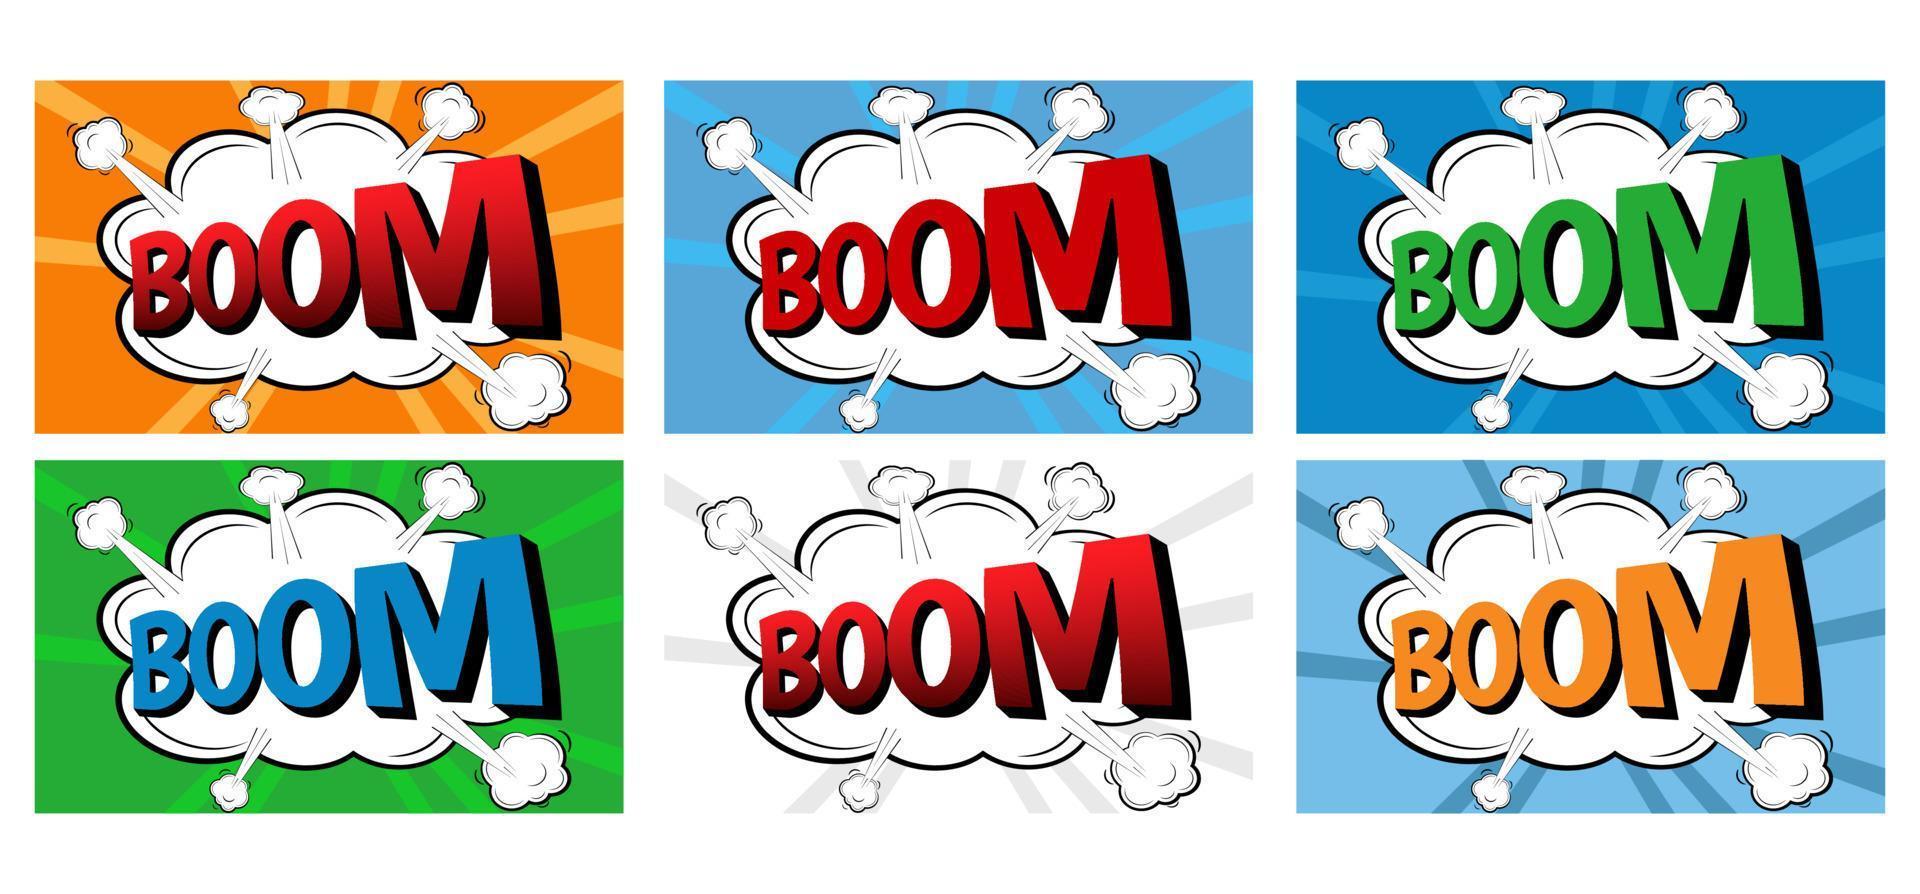 Boom Comic Text Speech Bubble. Comic book poster background vector